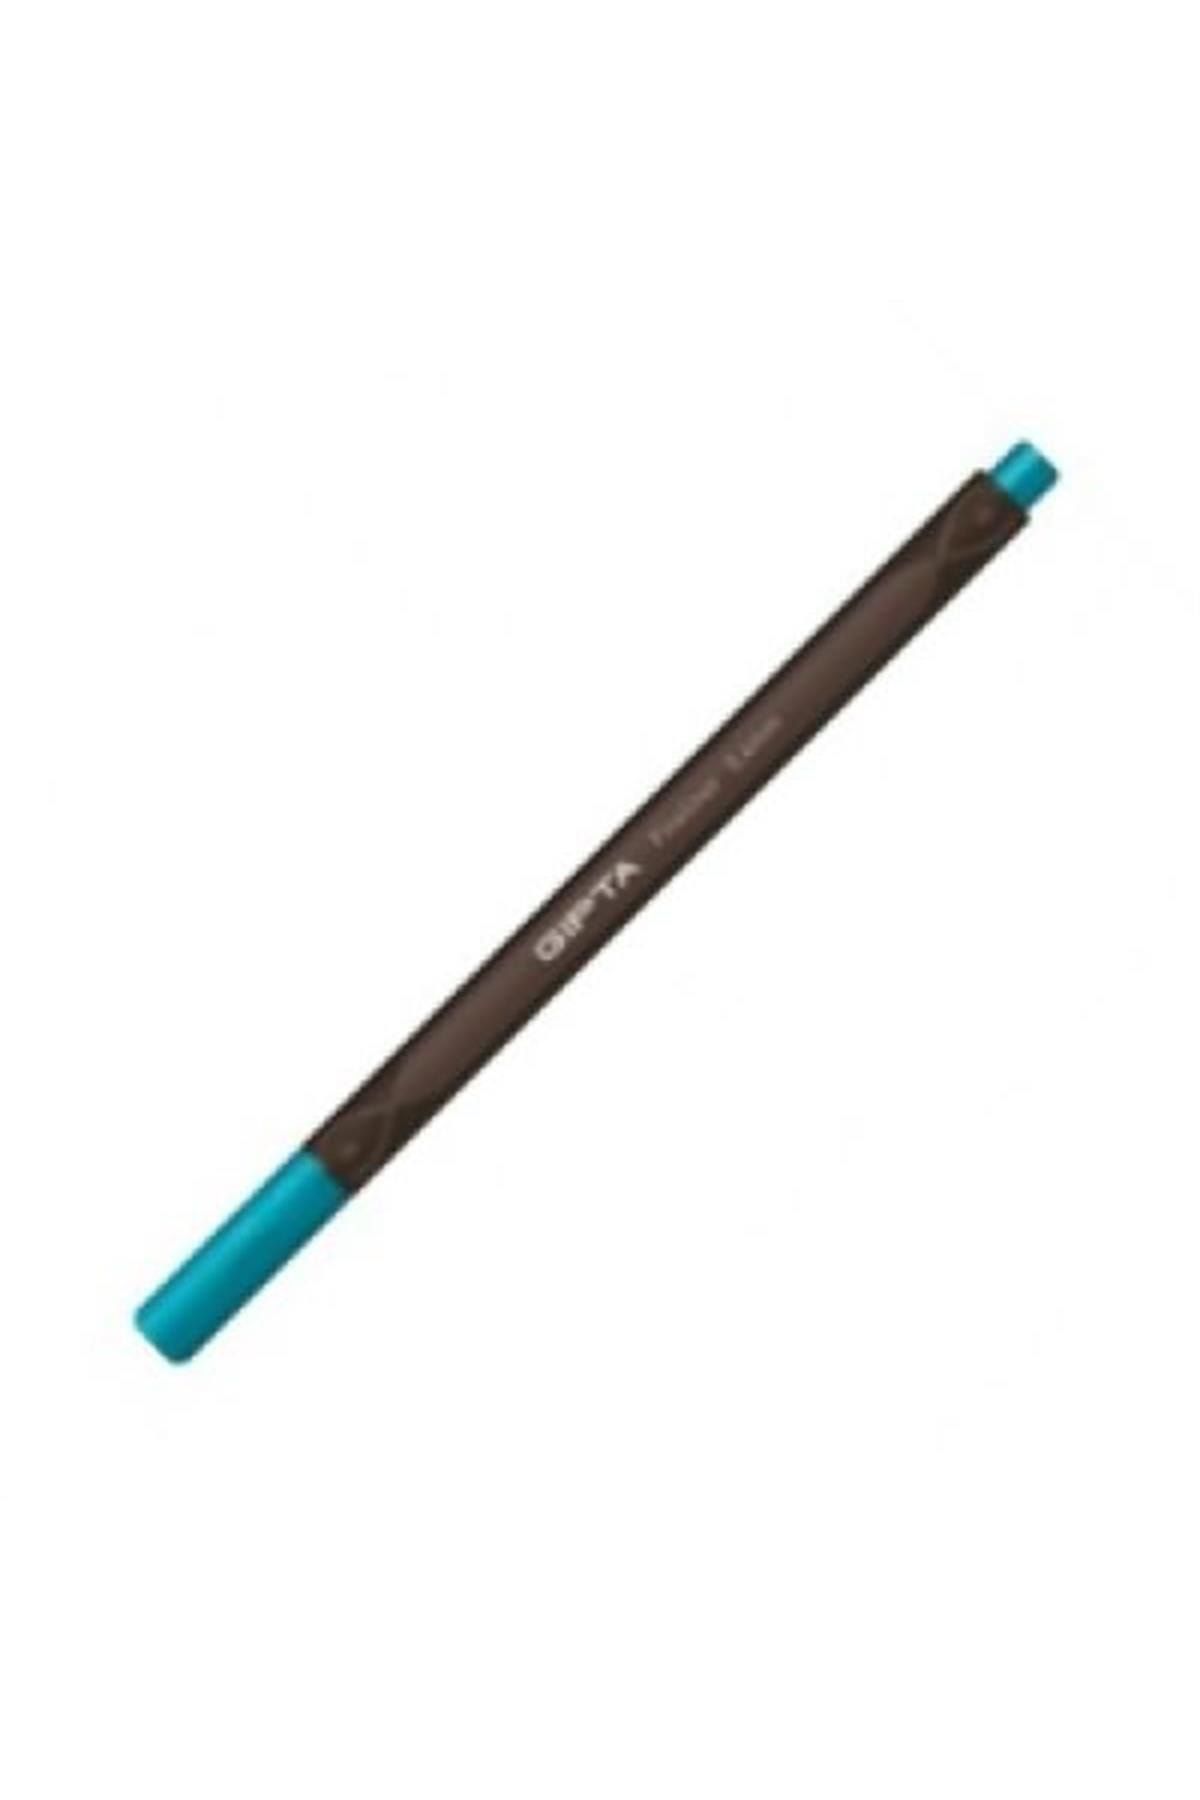 Gıpta Fınelıner Kalem 0,4mm Acık Mavi